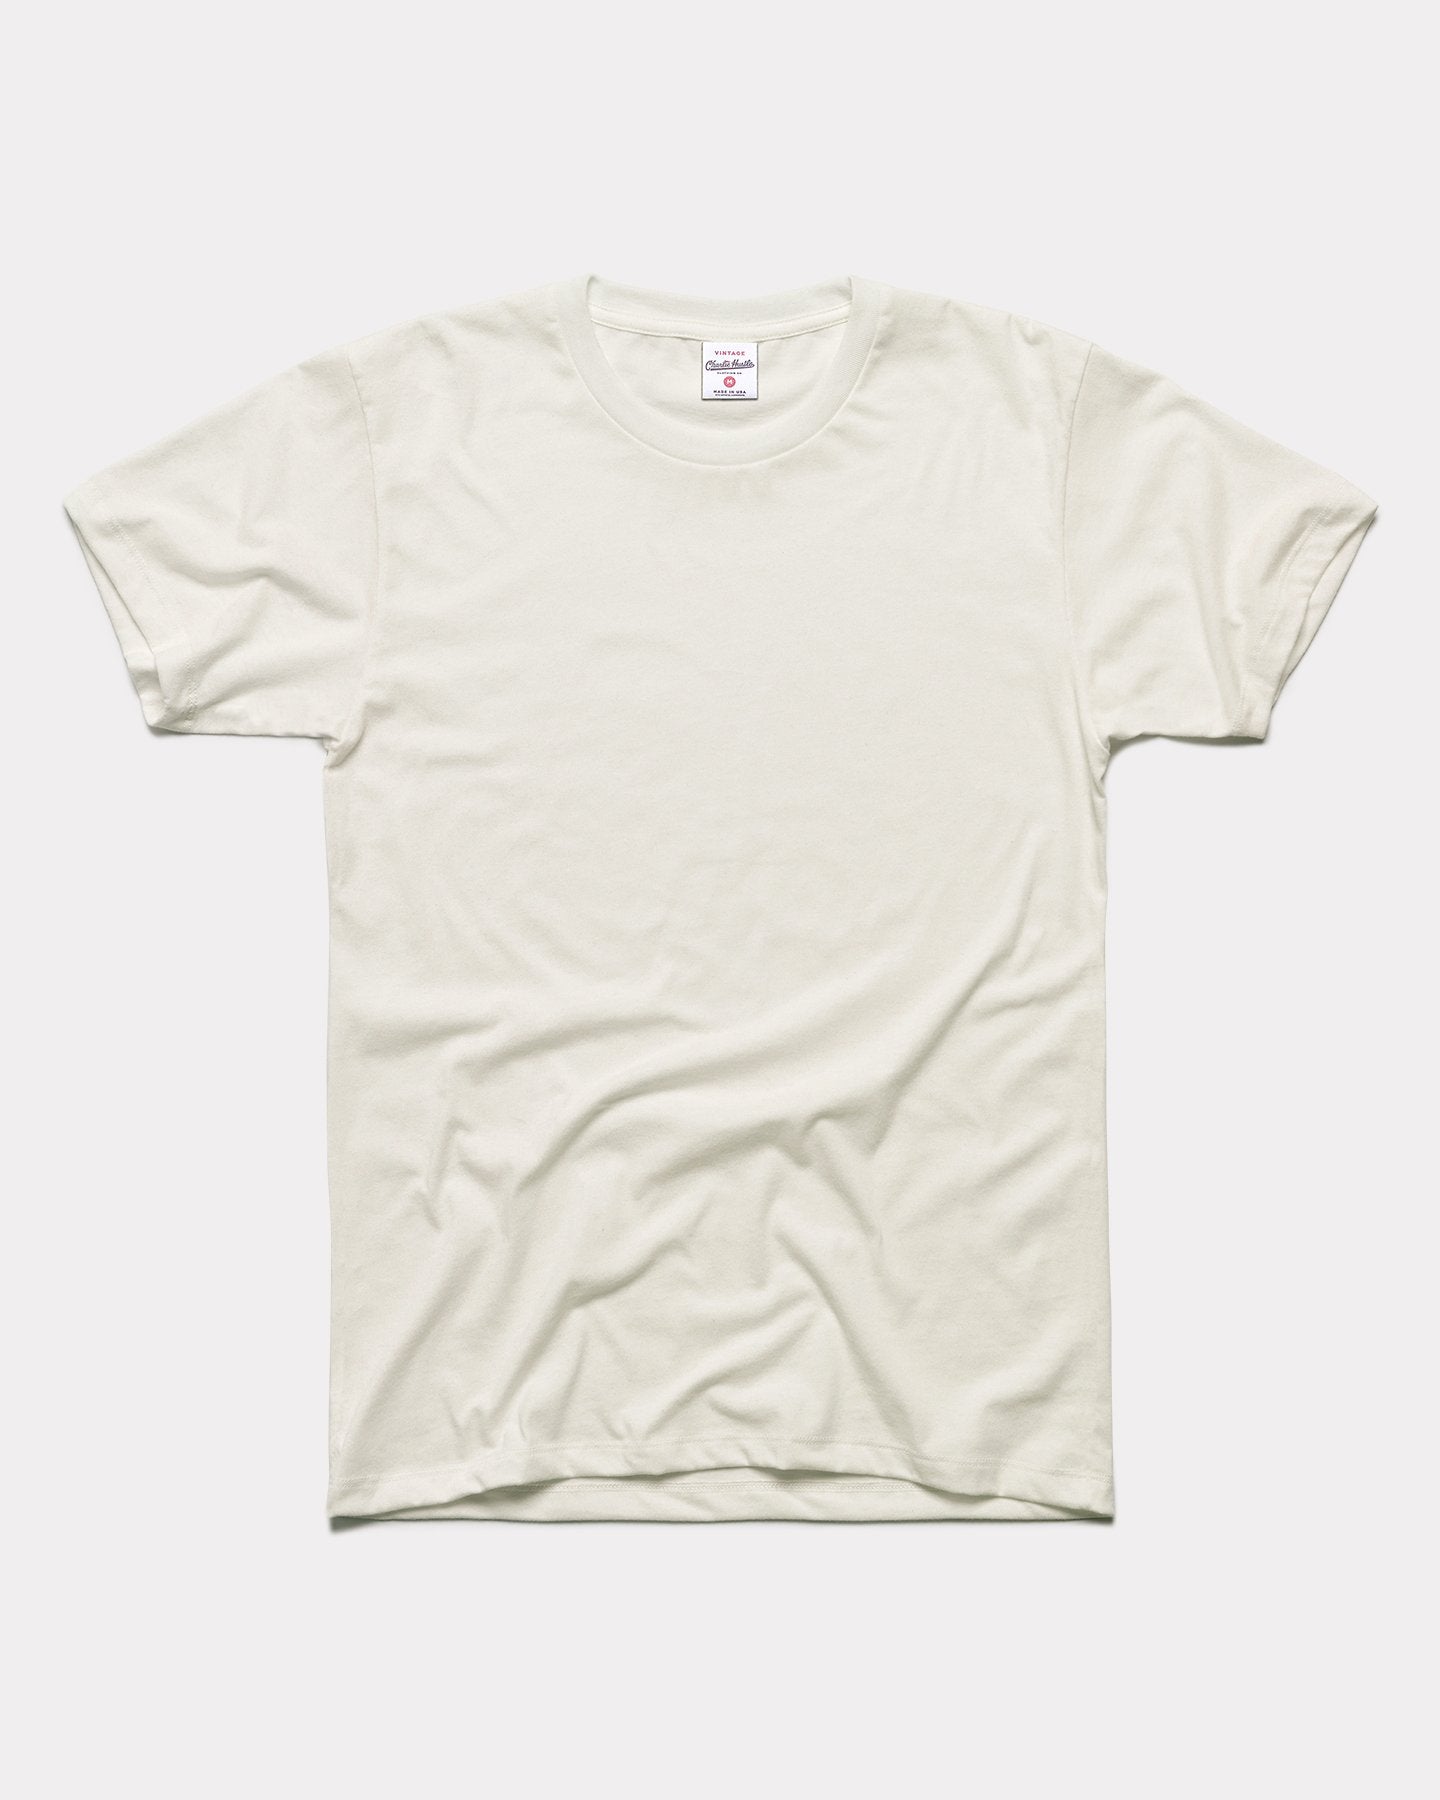 Chutzpah | Essential T-Shirt